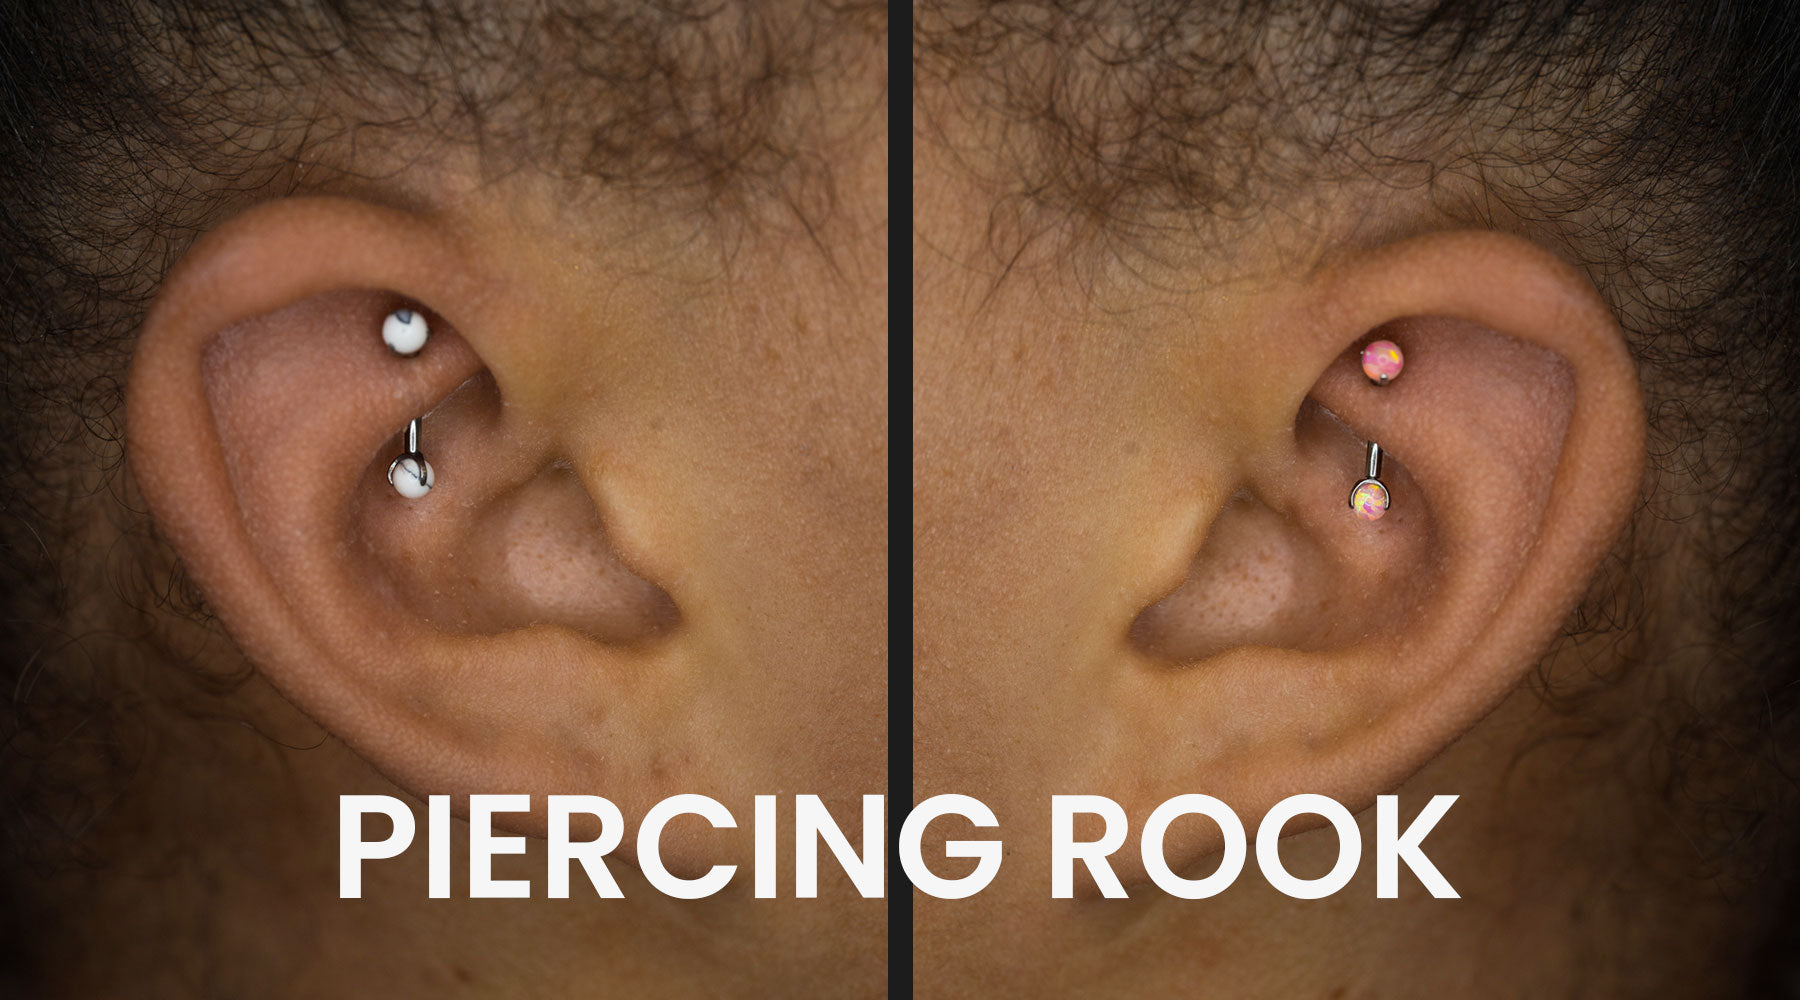 Tragus piercing: pain, healing, jewelry - obsidian piercing